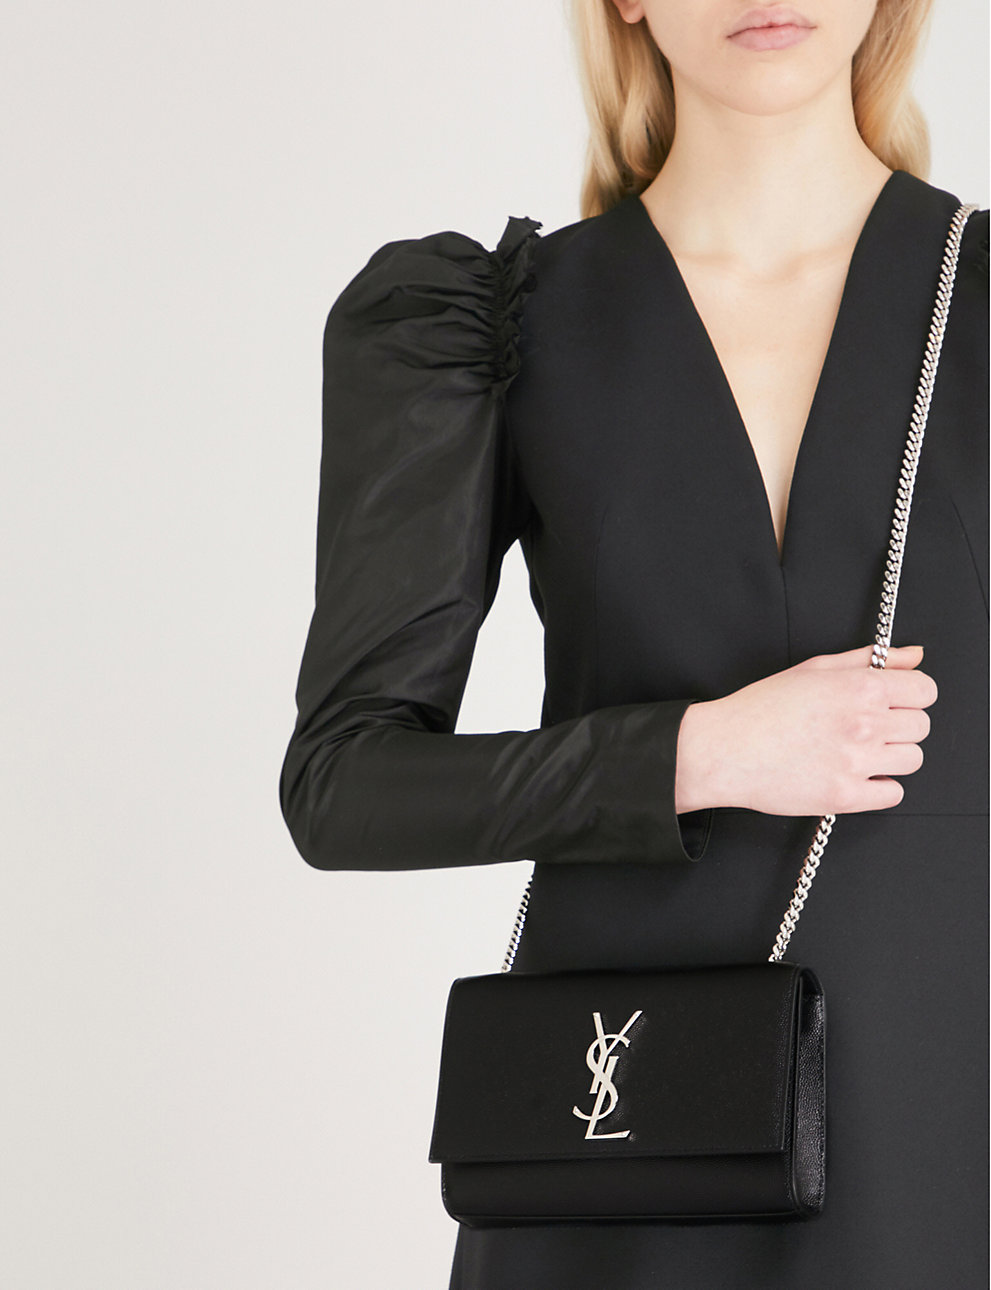 Saint Laurent 'kate Small' Shoulder Bag in Black